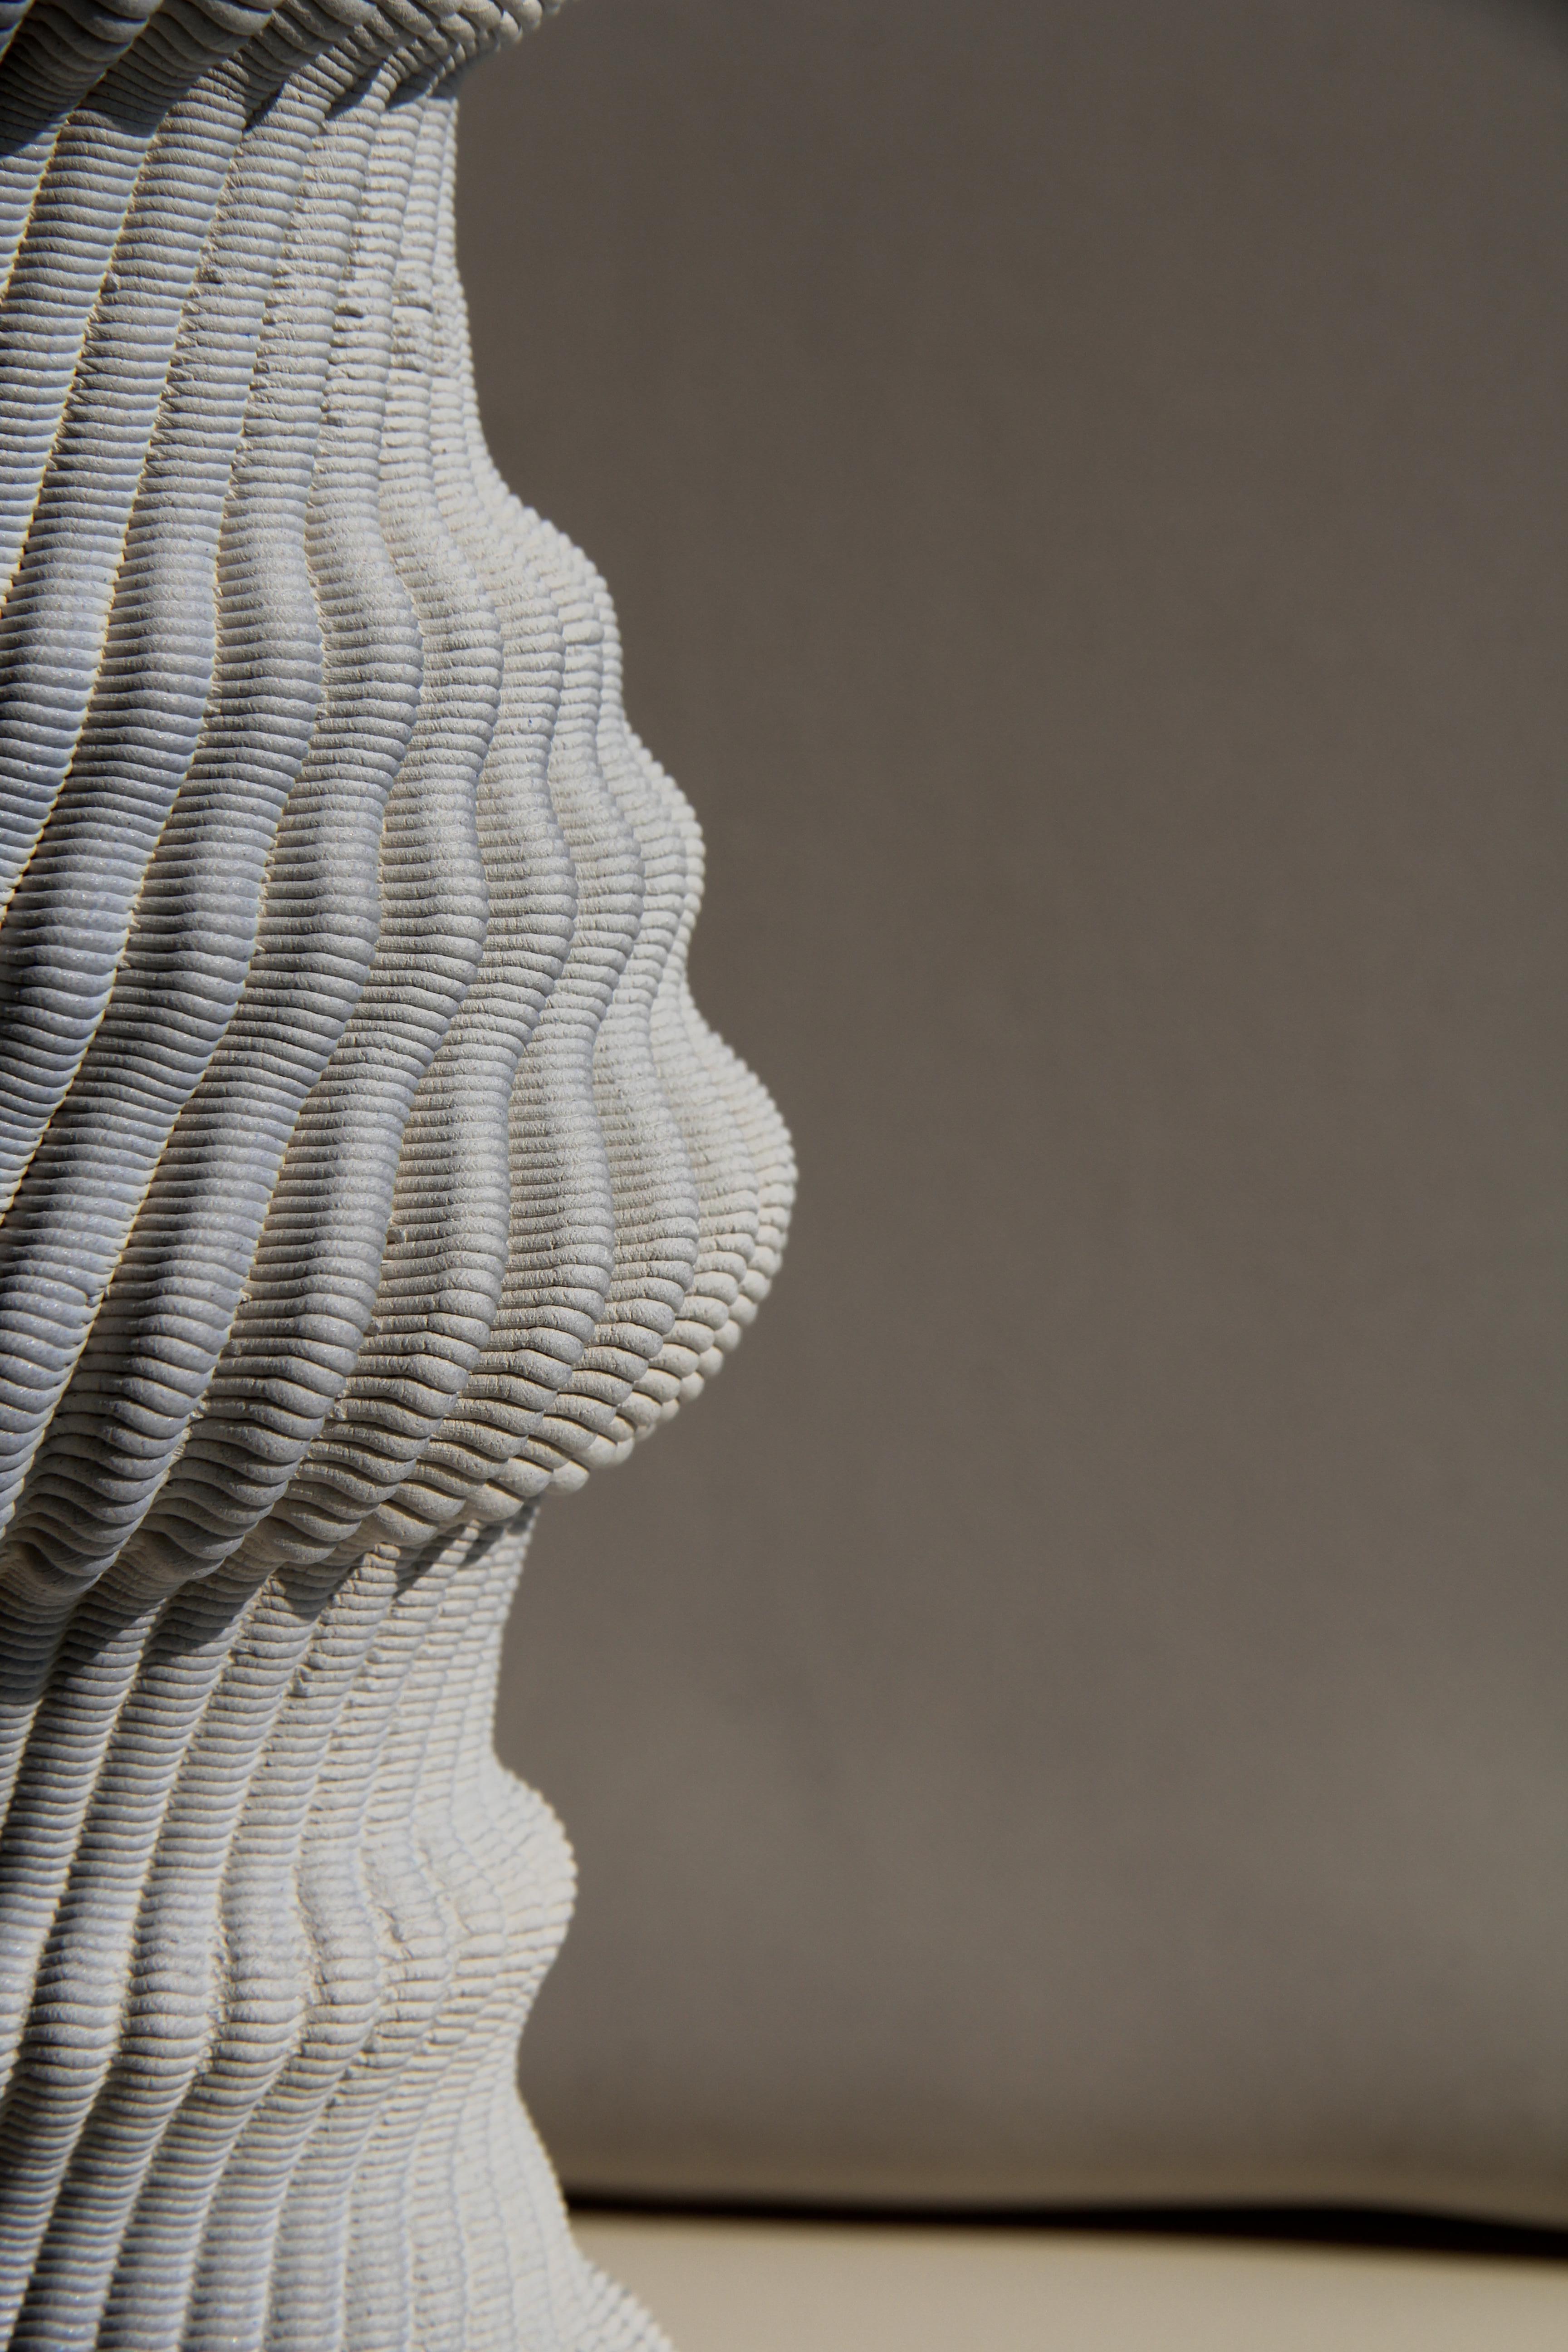 Gradient Blue 3D Printed Ceramic Tecla Vase Italy Contemporary 21st Century For Sale 2